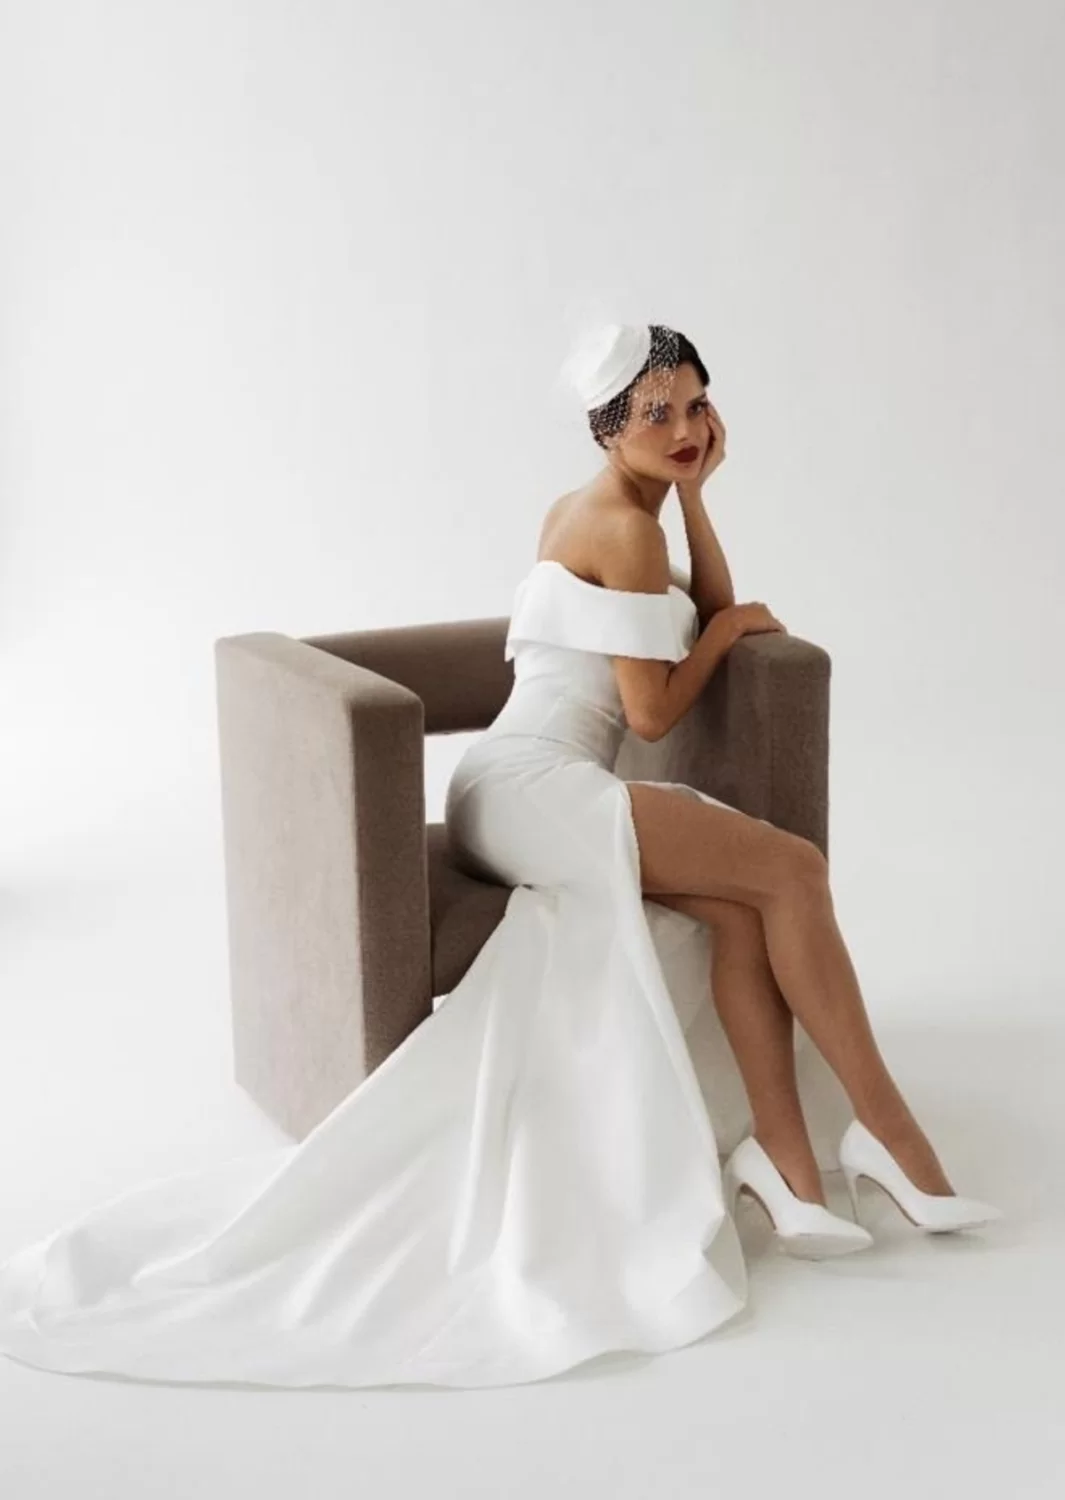 Kamilana-couture свадьба в стиле винтаж.png